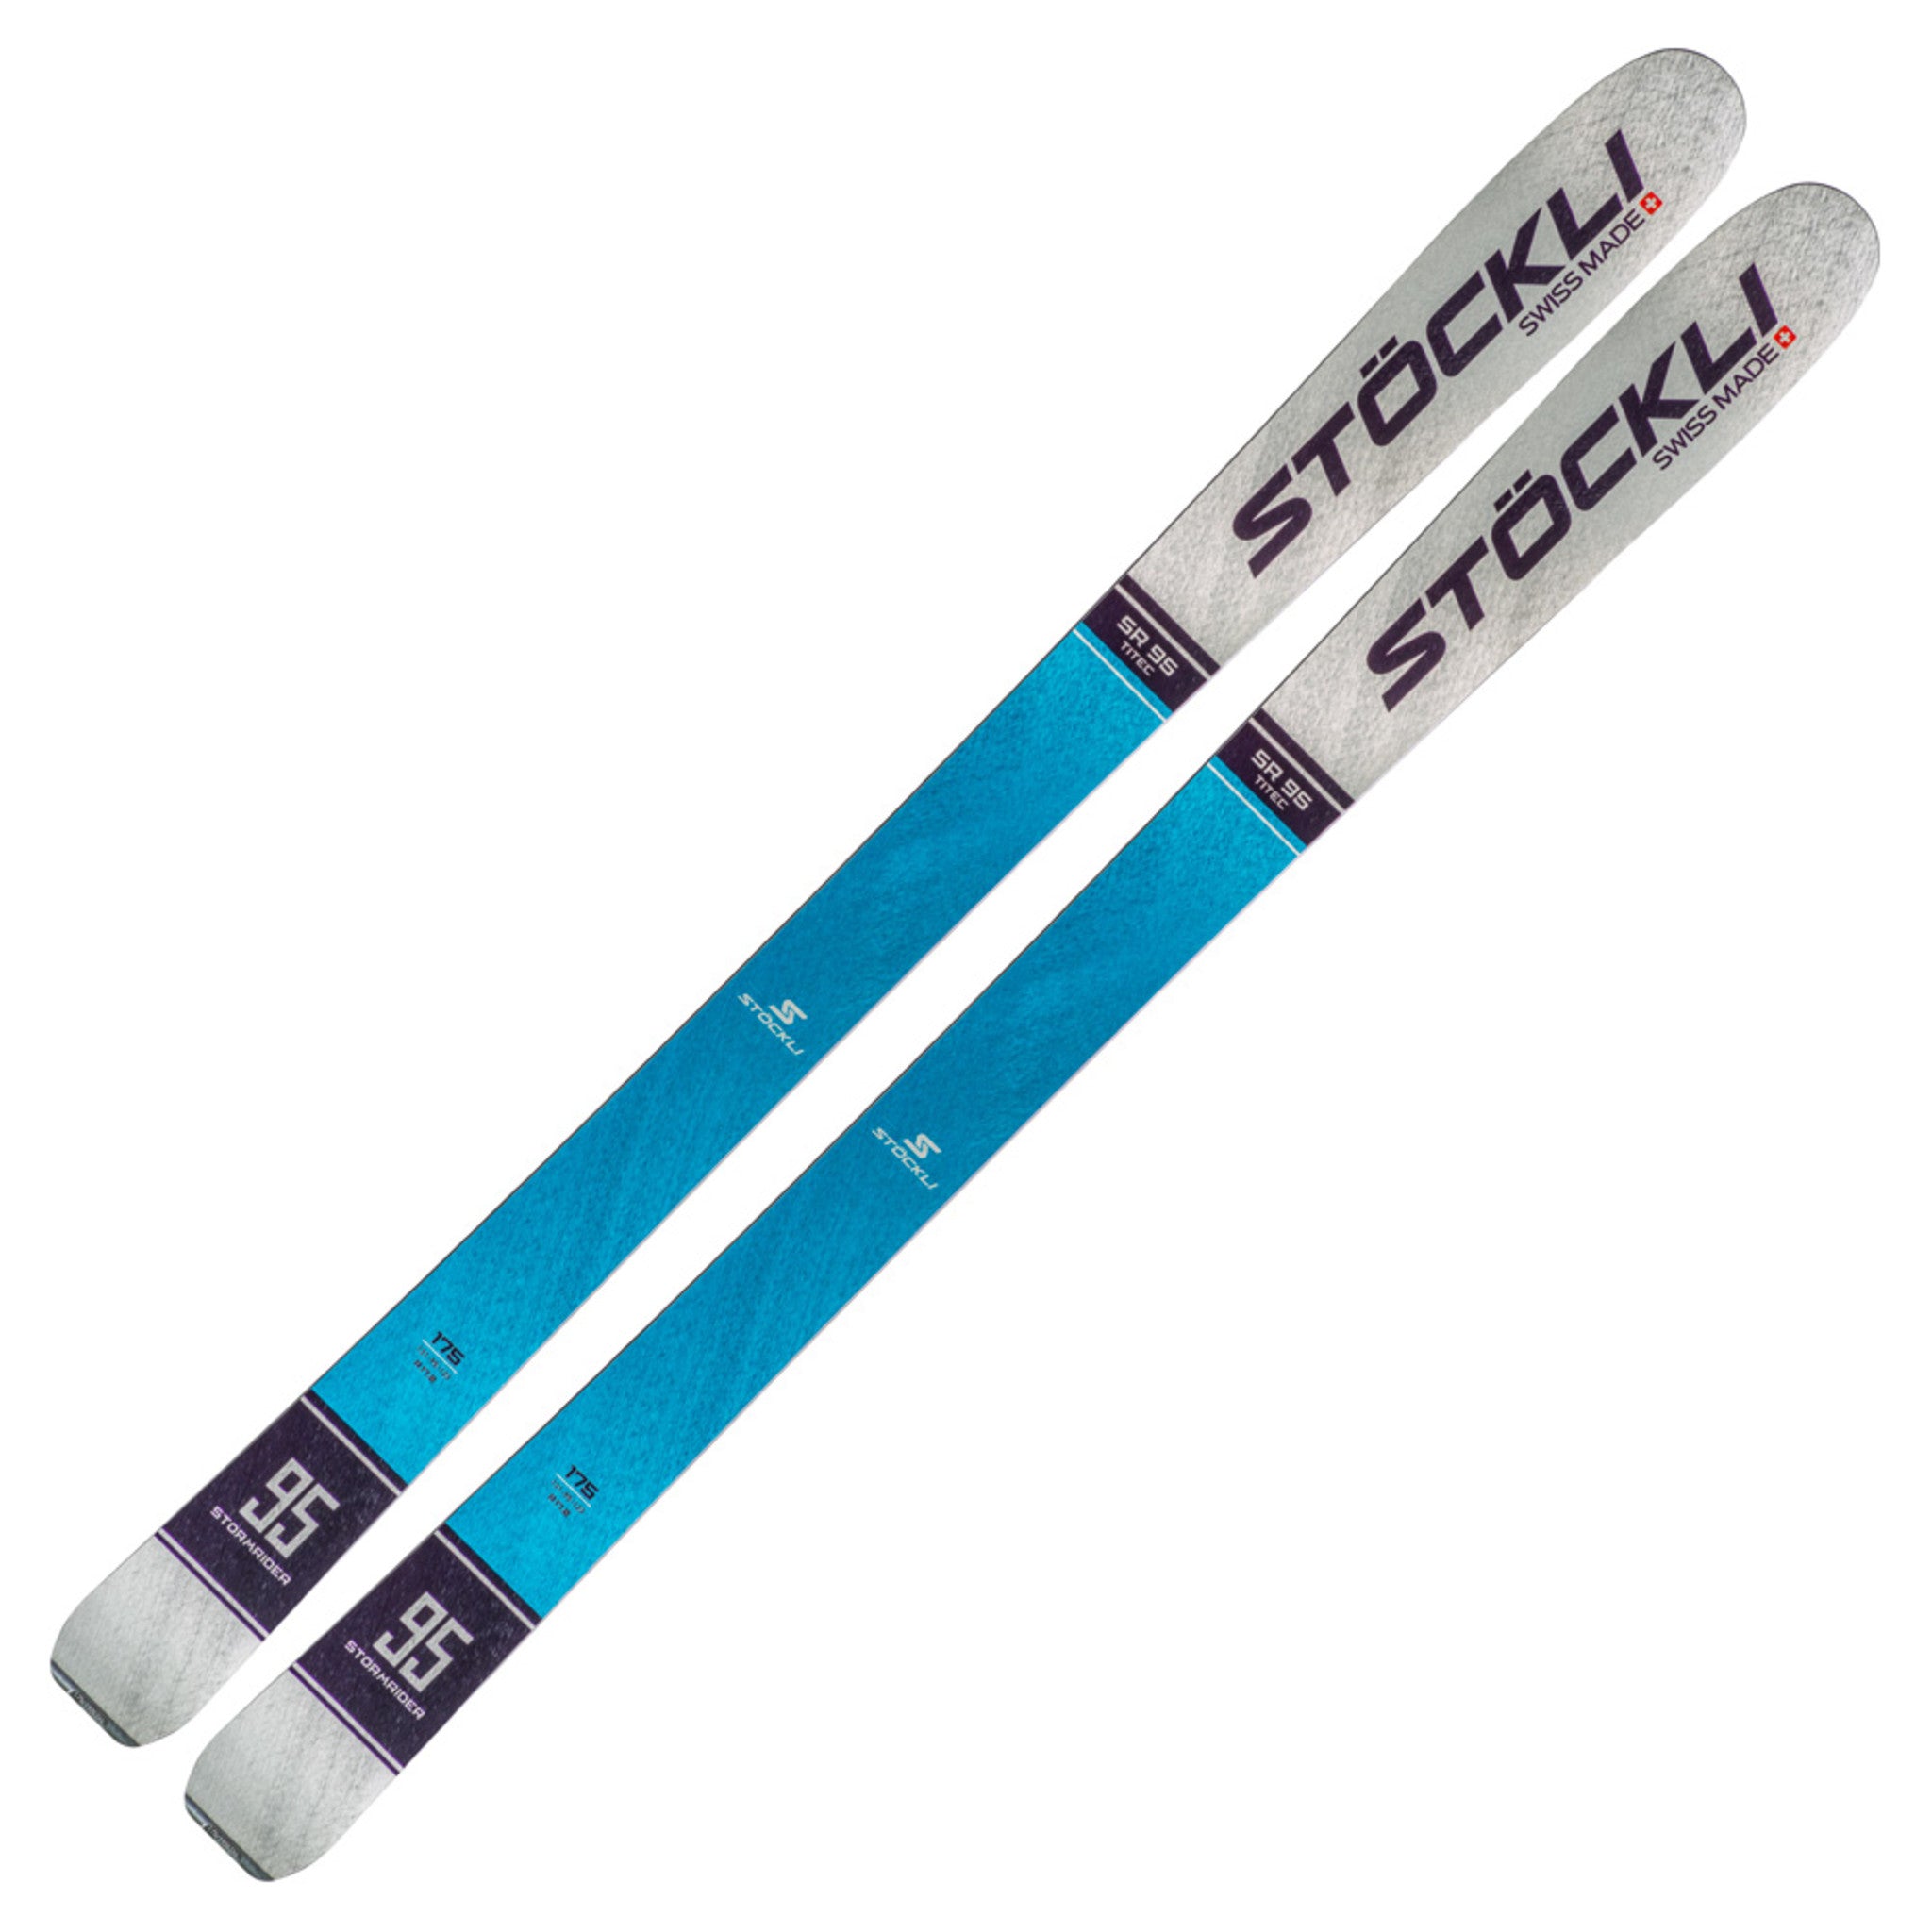 2021 Stockli Stormrider 95 Skis – Ski Essentials